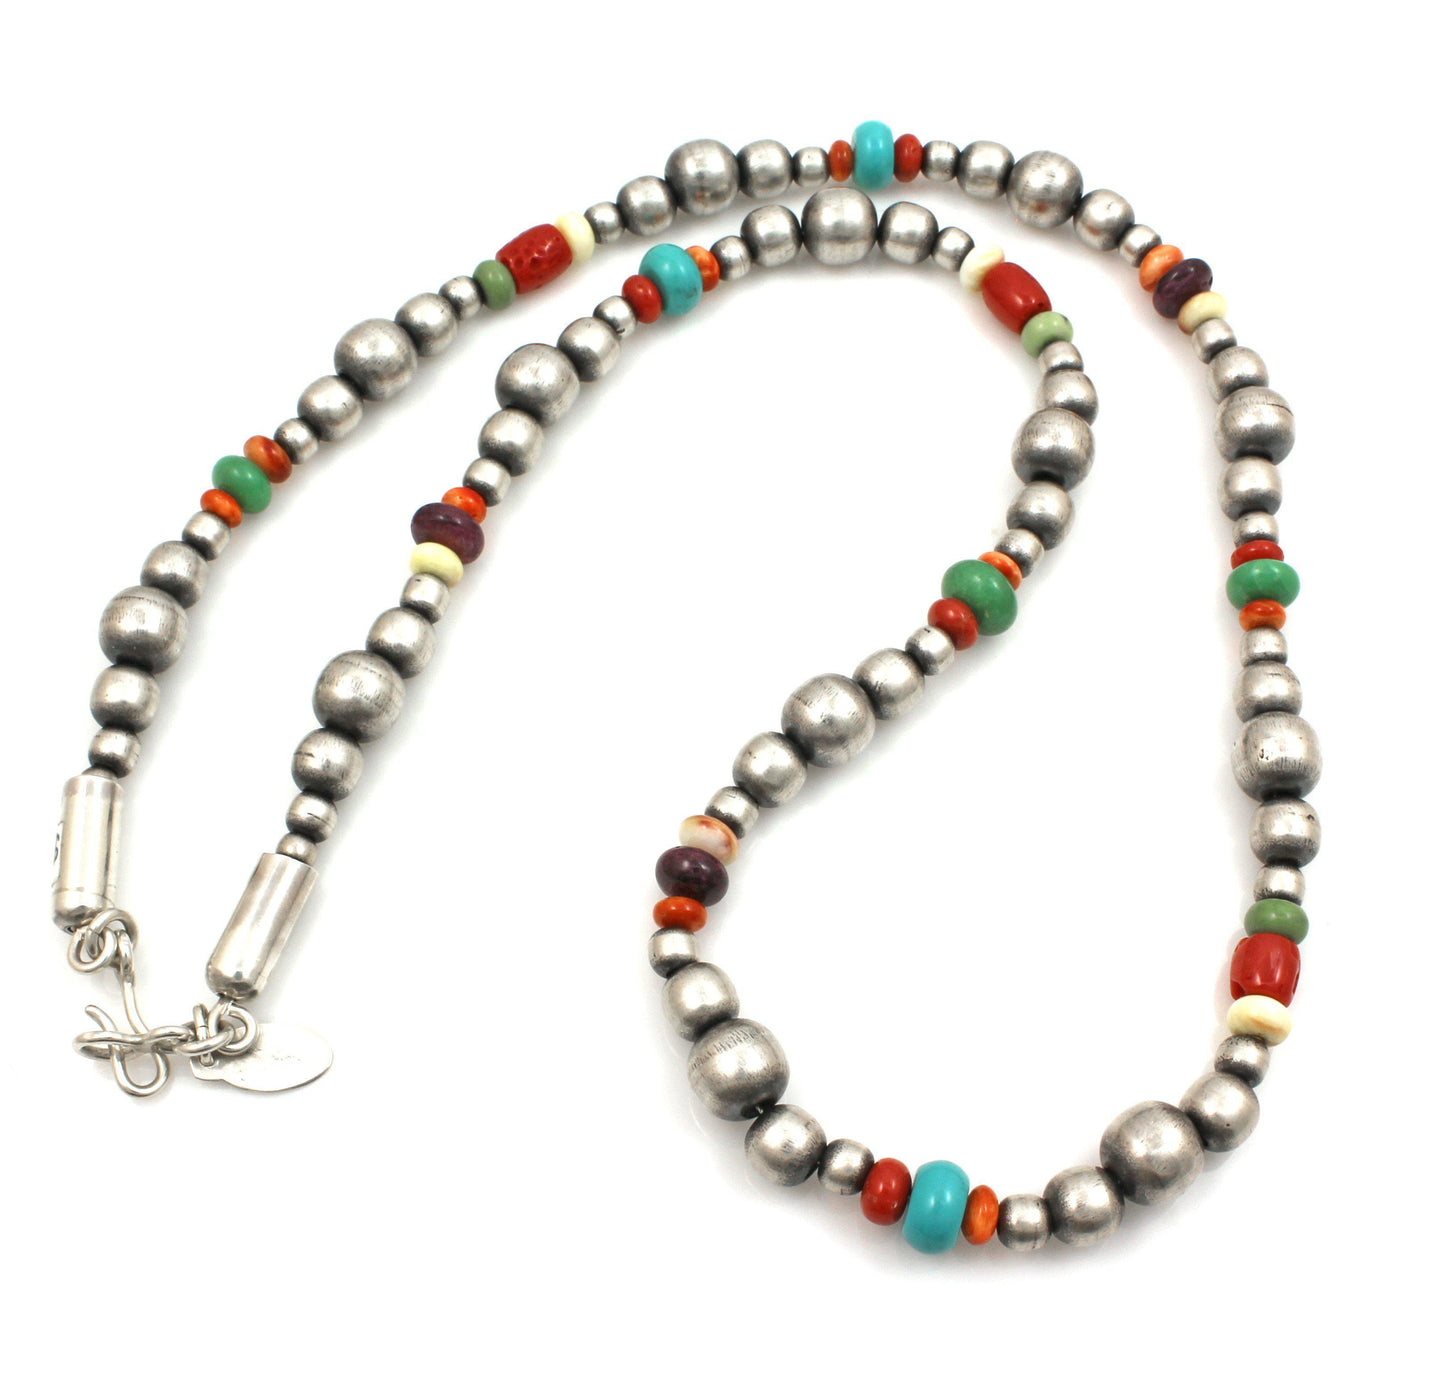 24" Multi Color Silver Bead Necklace-Jewelry-Don Lucas-Sorrel Sky Gallery